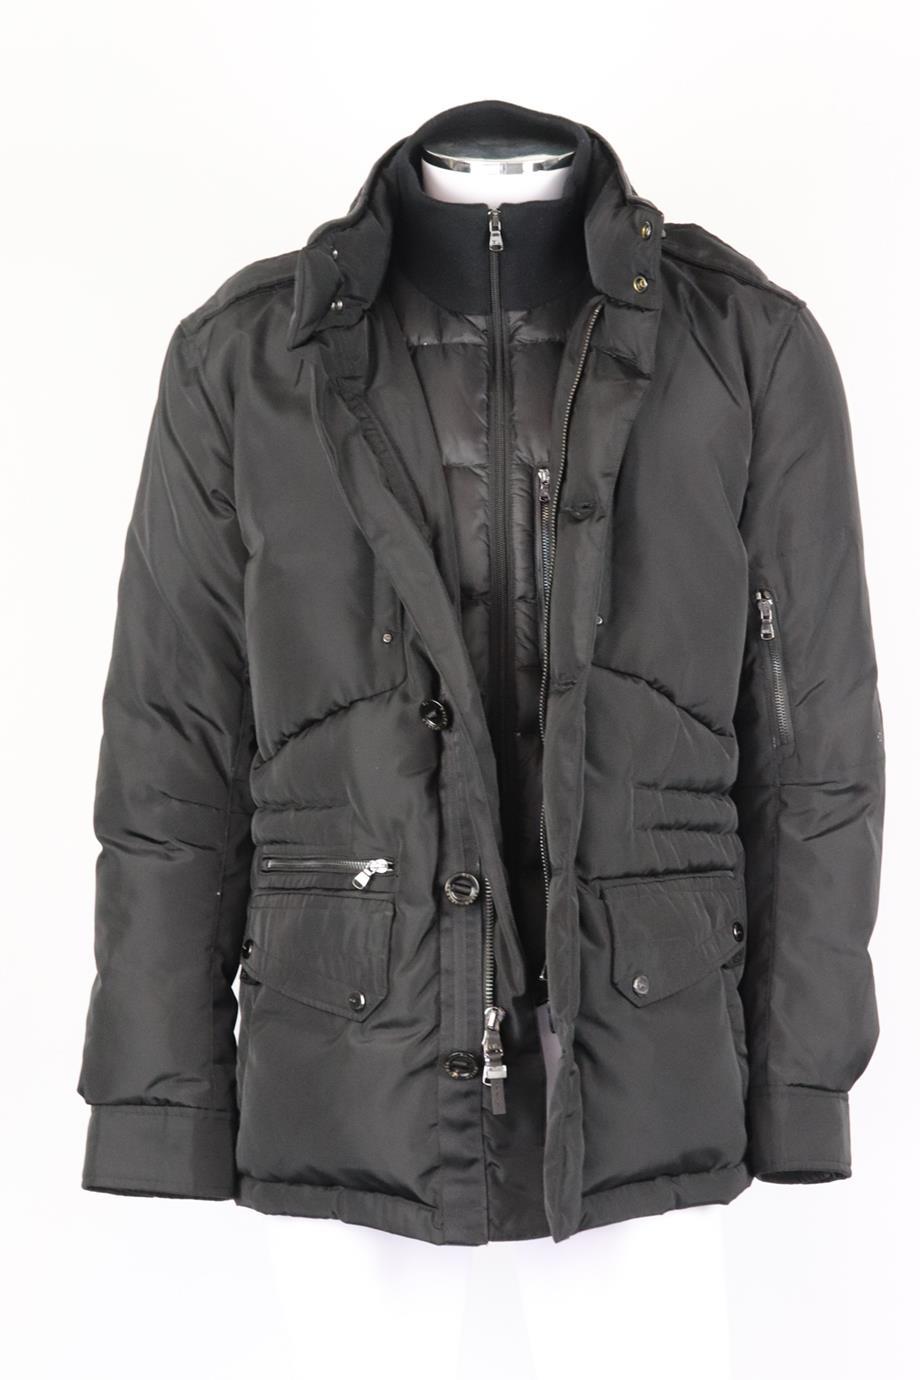 Ralph Lauren Black Label Men's Quilted Gabardine Down Jacket Large 1